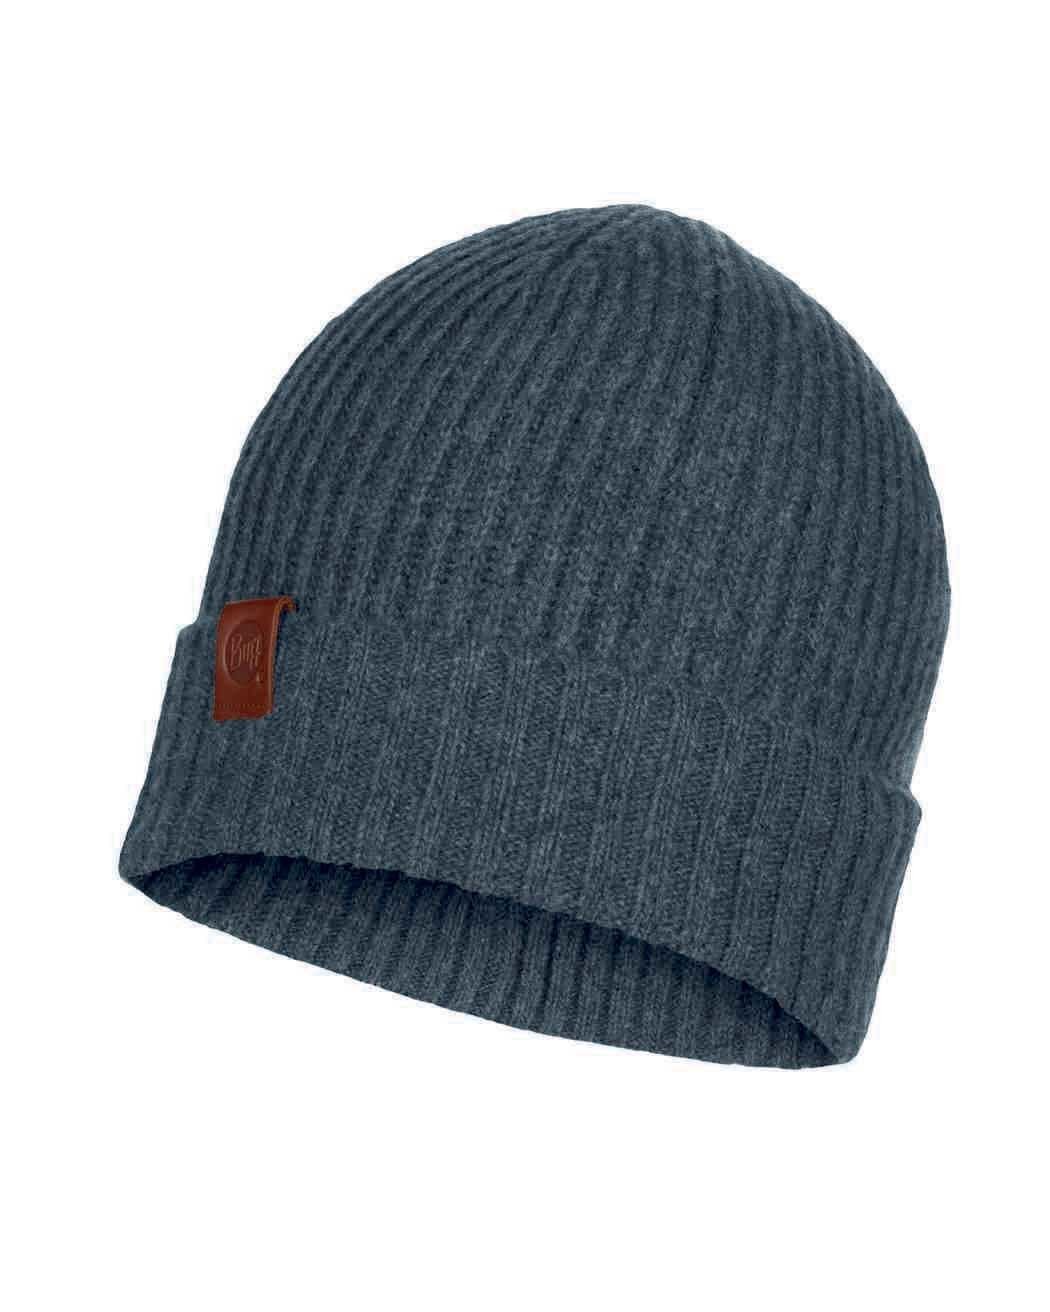 Шапка Buff Knitted hat biorn grey - фото 1